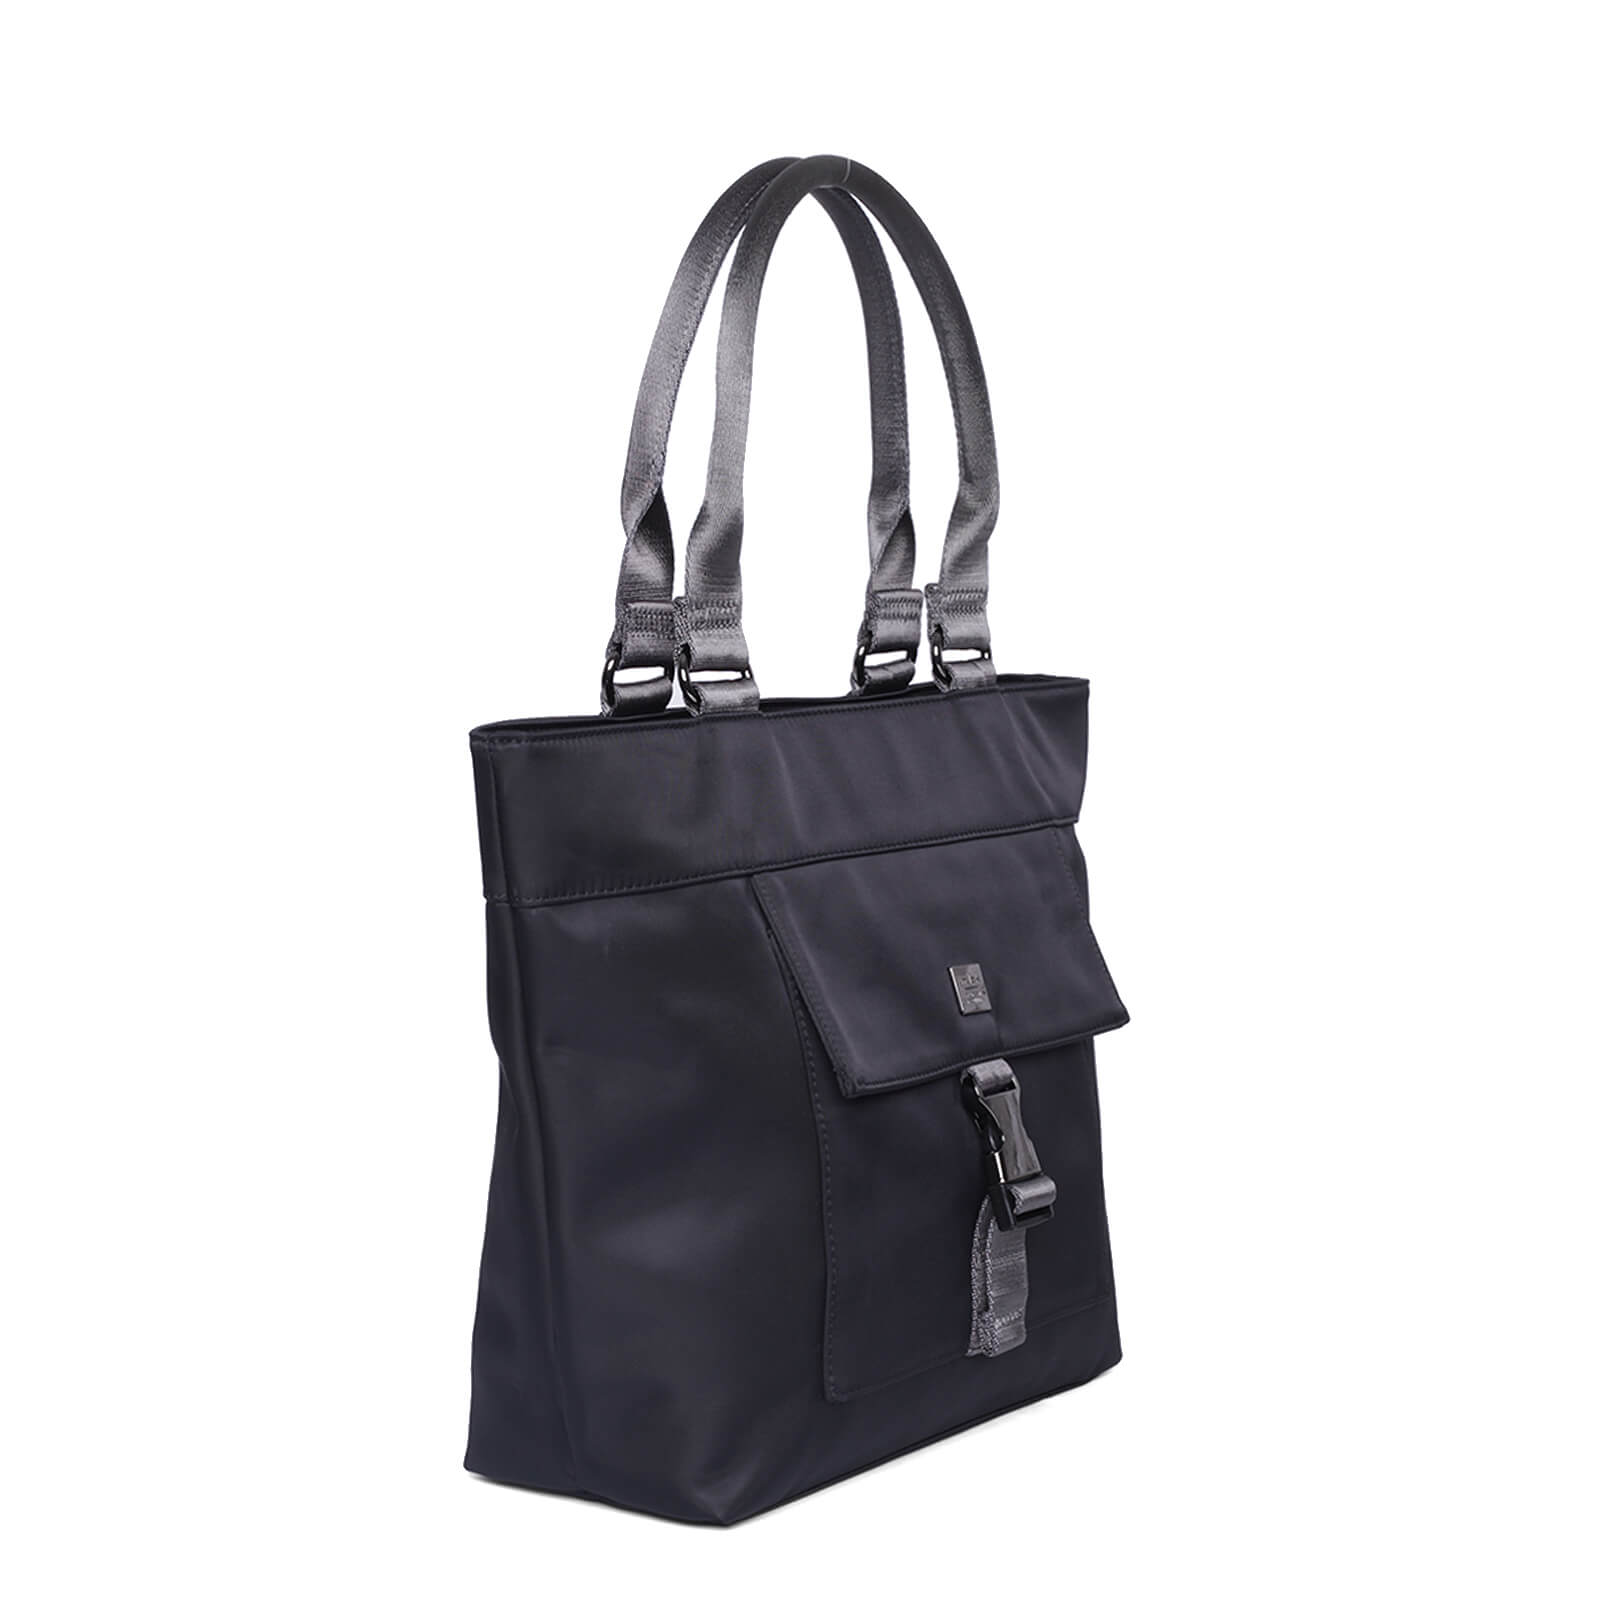 bolsa-shopping-bag-nylon-bnt-61039-unclek-2